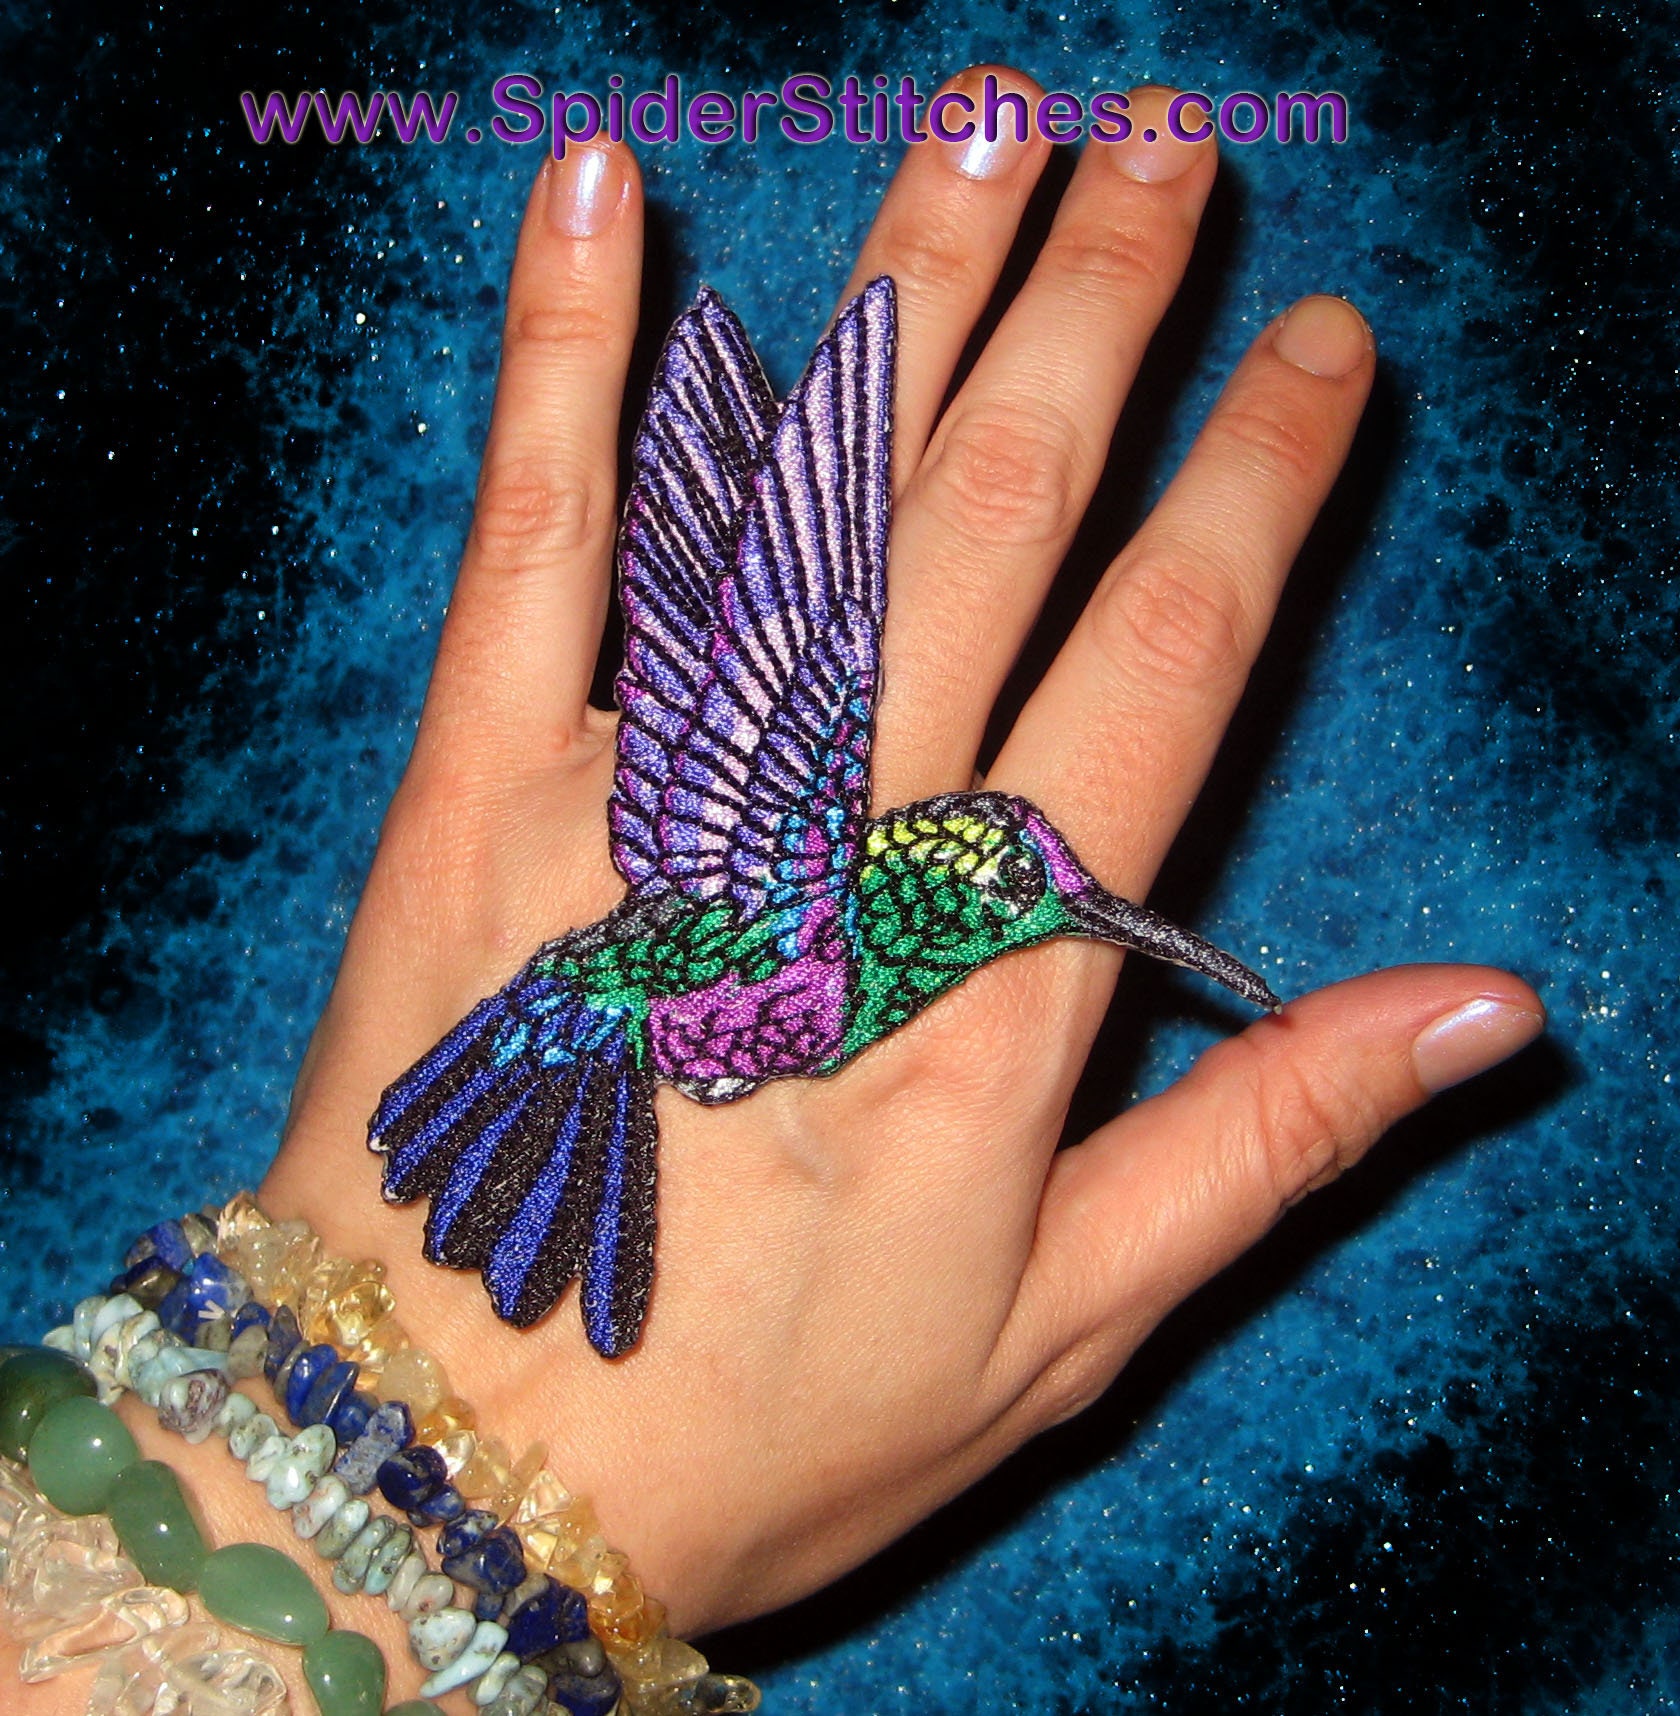 Hummingbird Applique Patch - Purple Flowers, Bird Badge 3.5 (Iron on) –  Patch Parlor